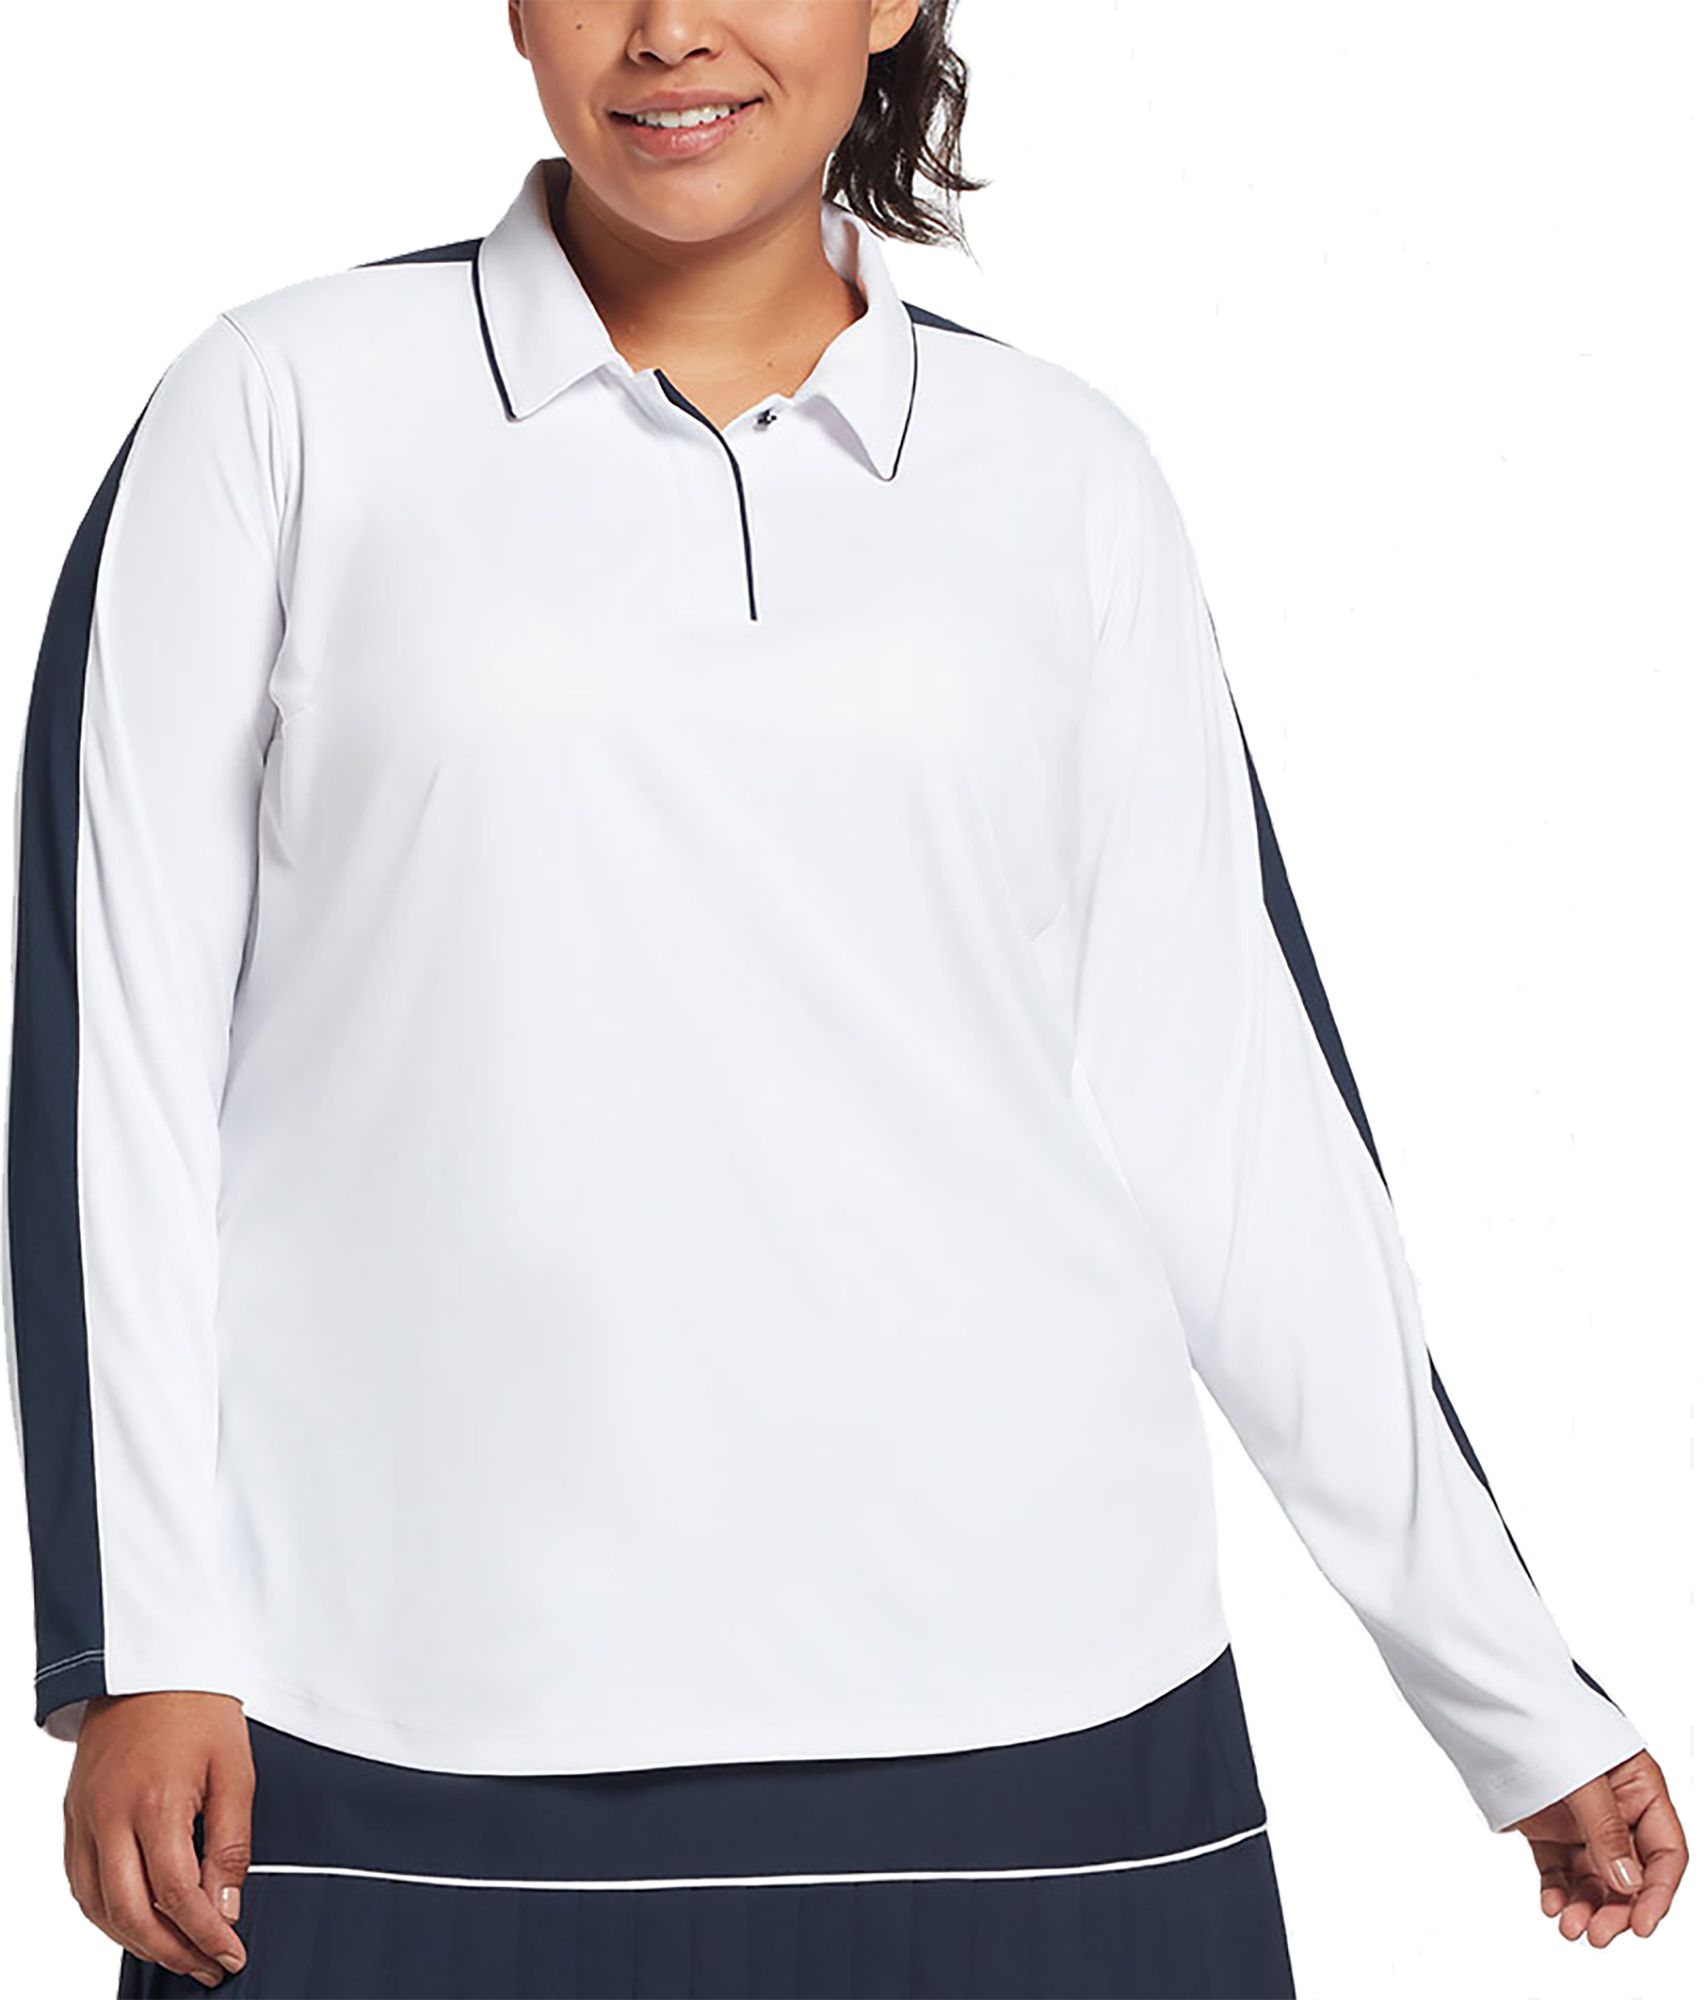 women's long sleeve golf polo shirts